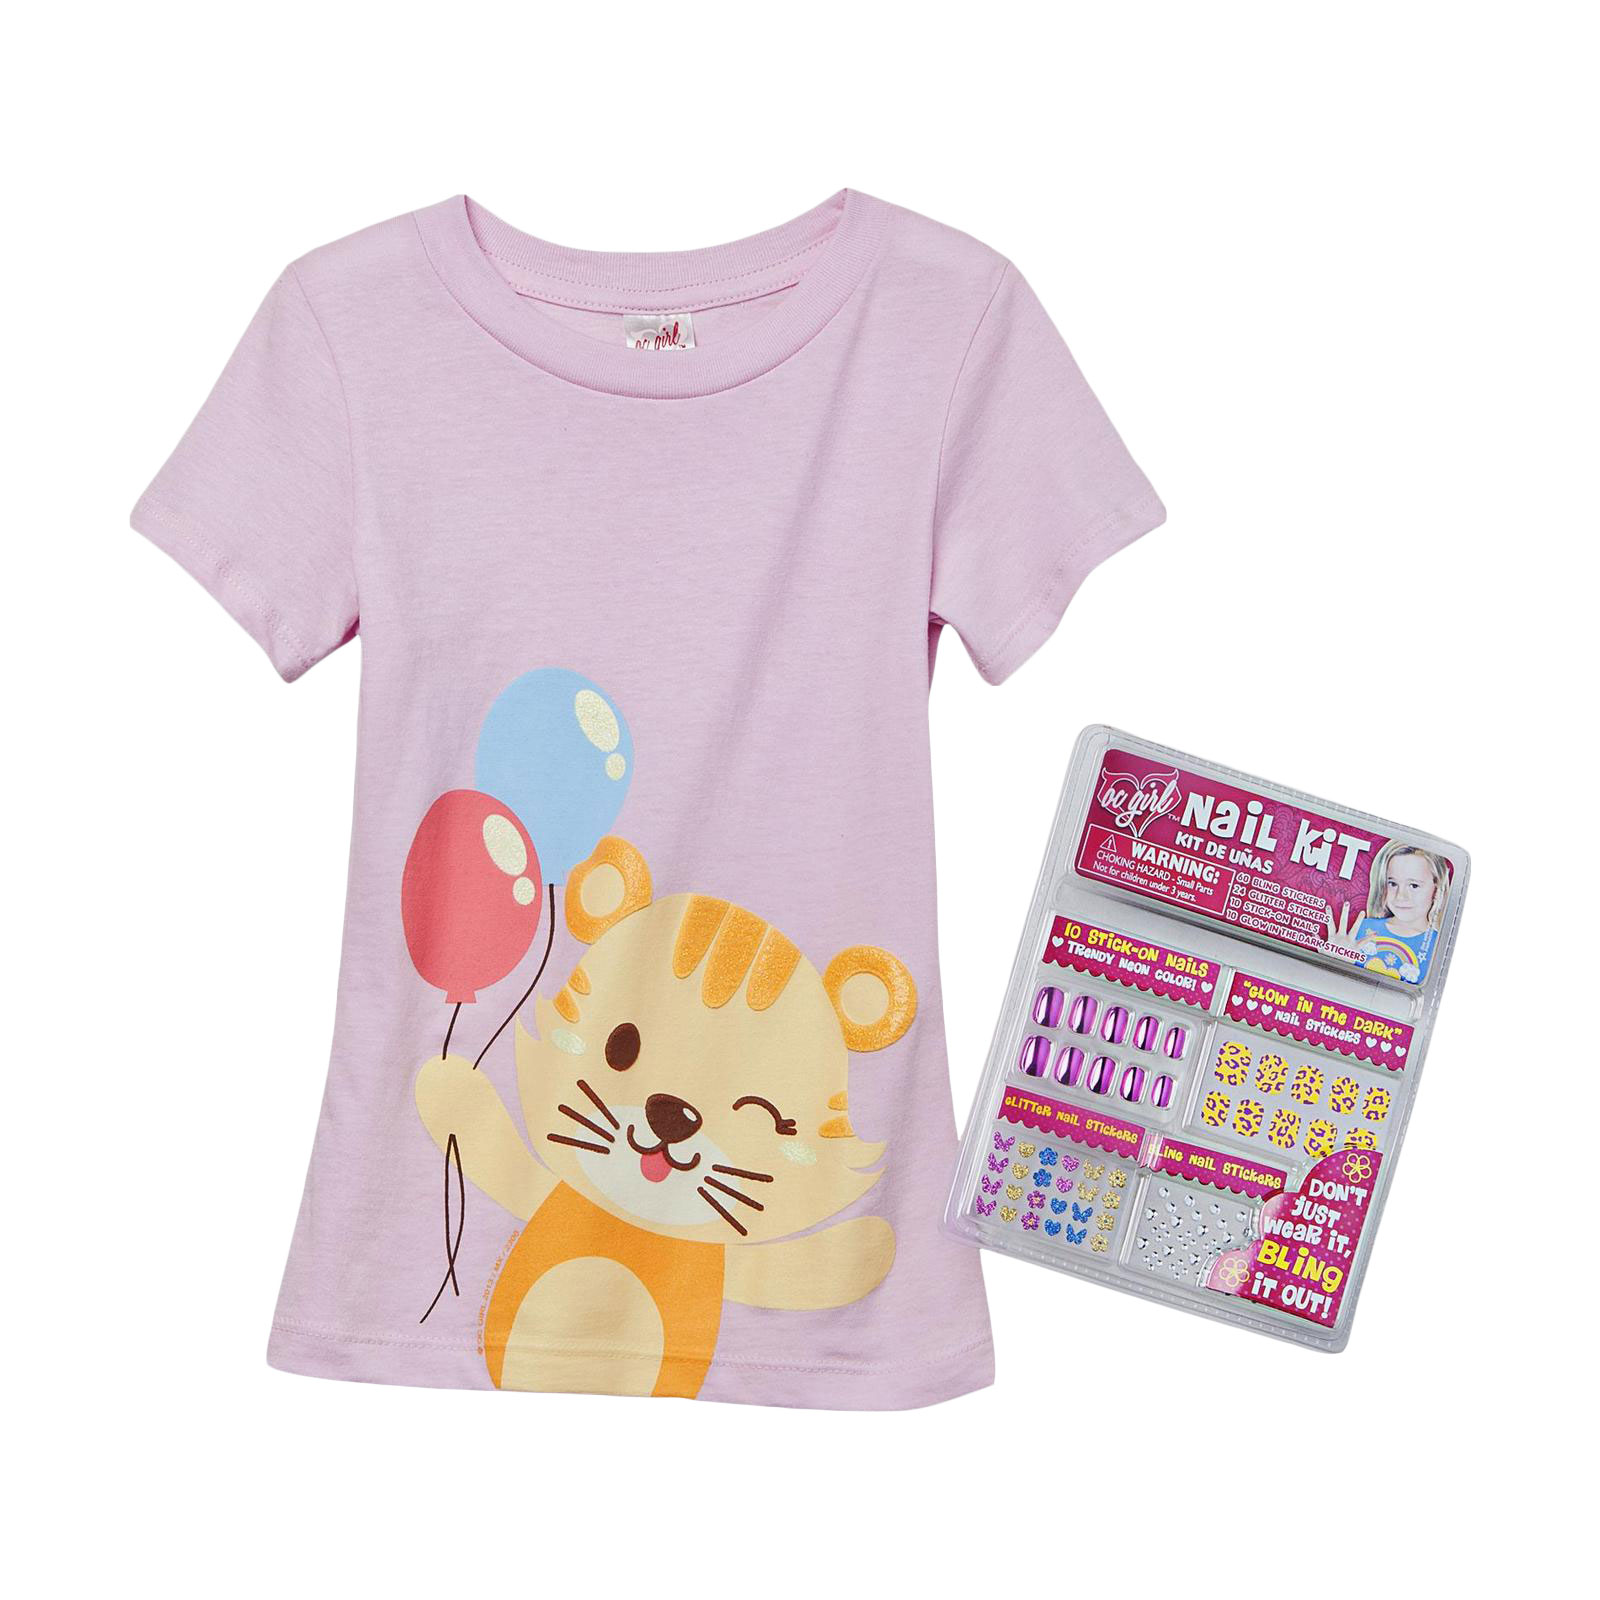 OC Girls Girl's Graphic T-Shirt & Nail Kit - Cat